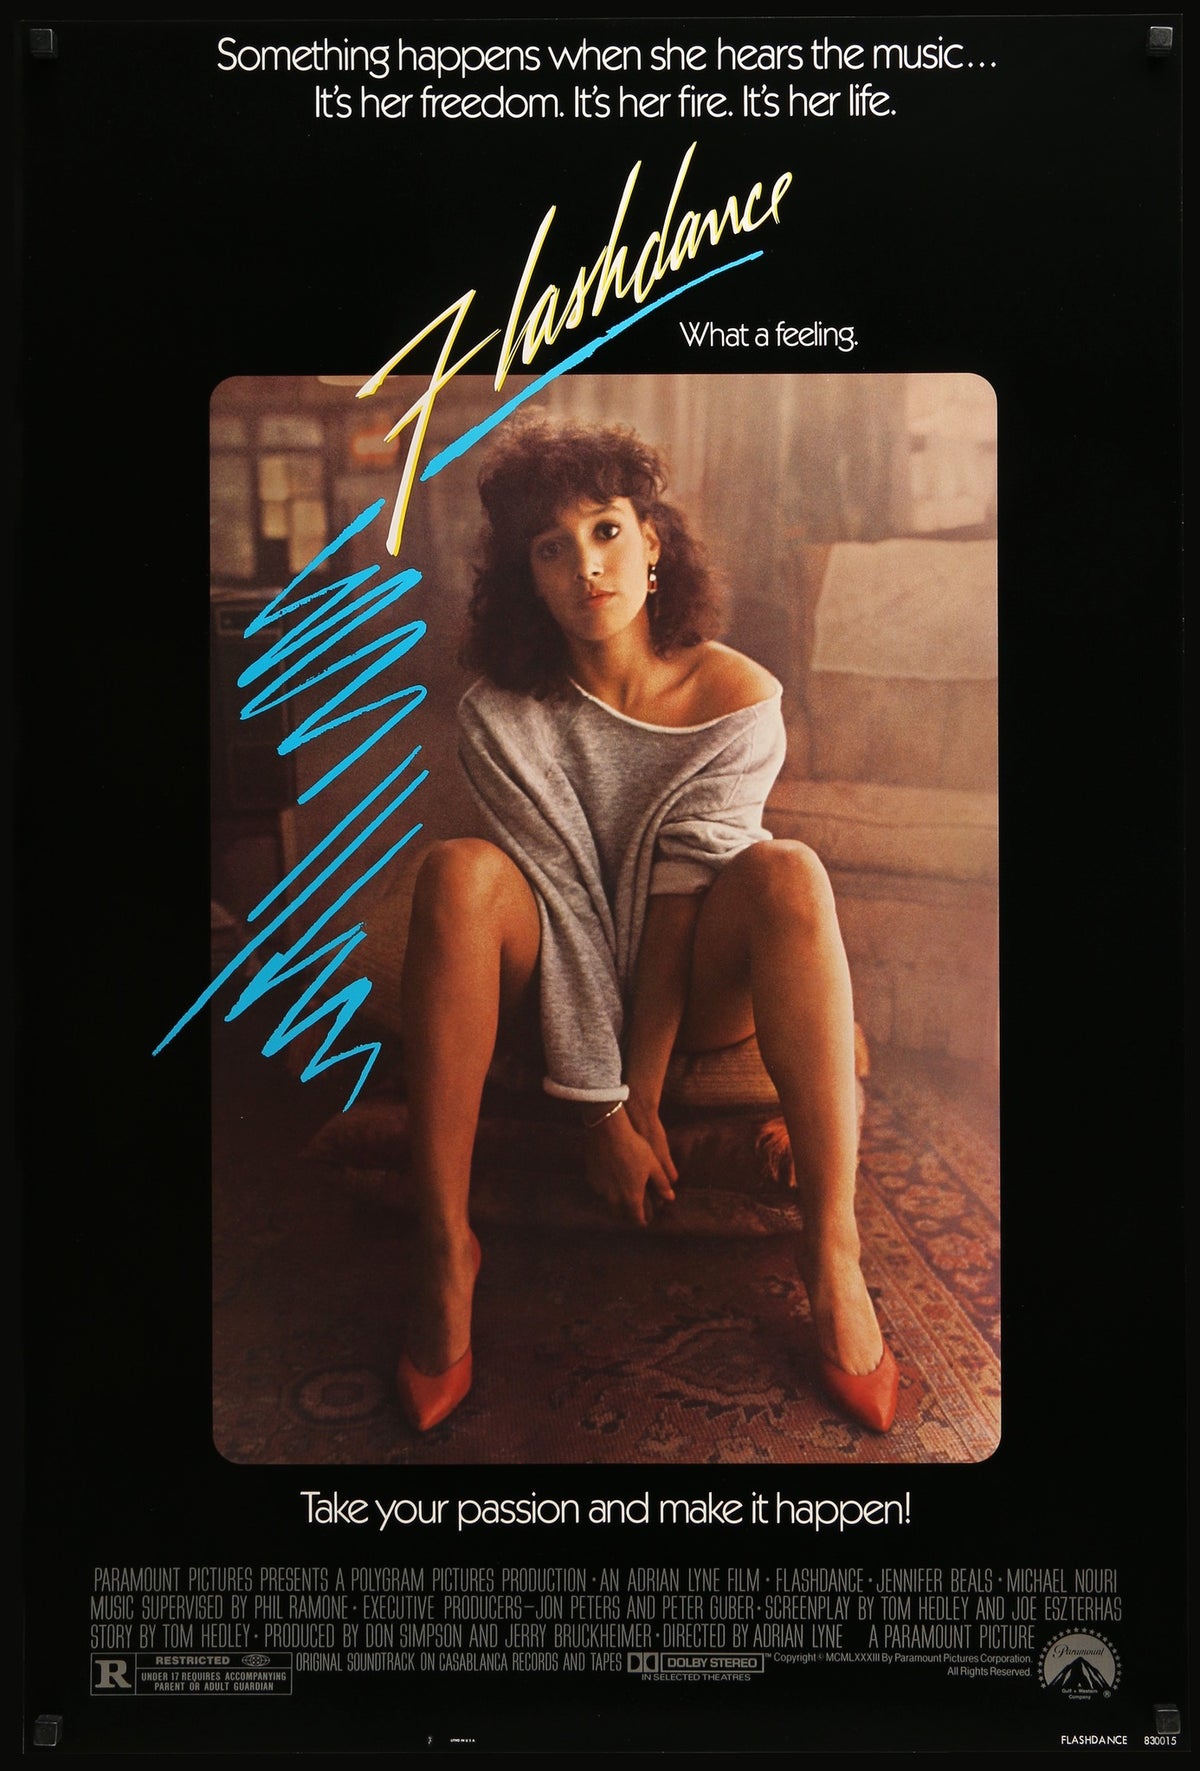 Flashdance (1983) original movie poster for sale at Original Film Art